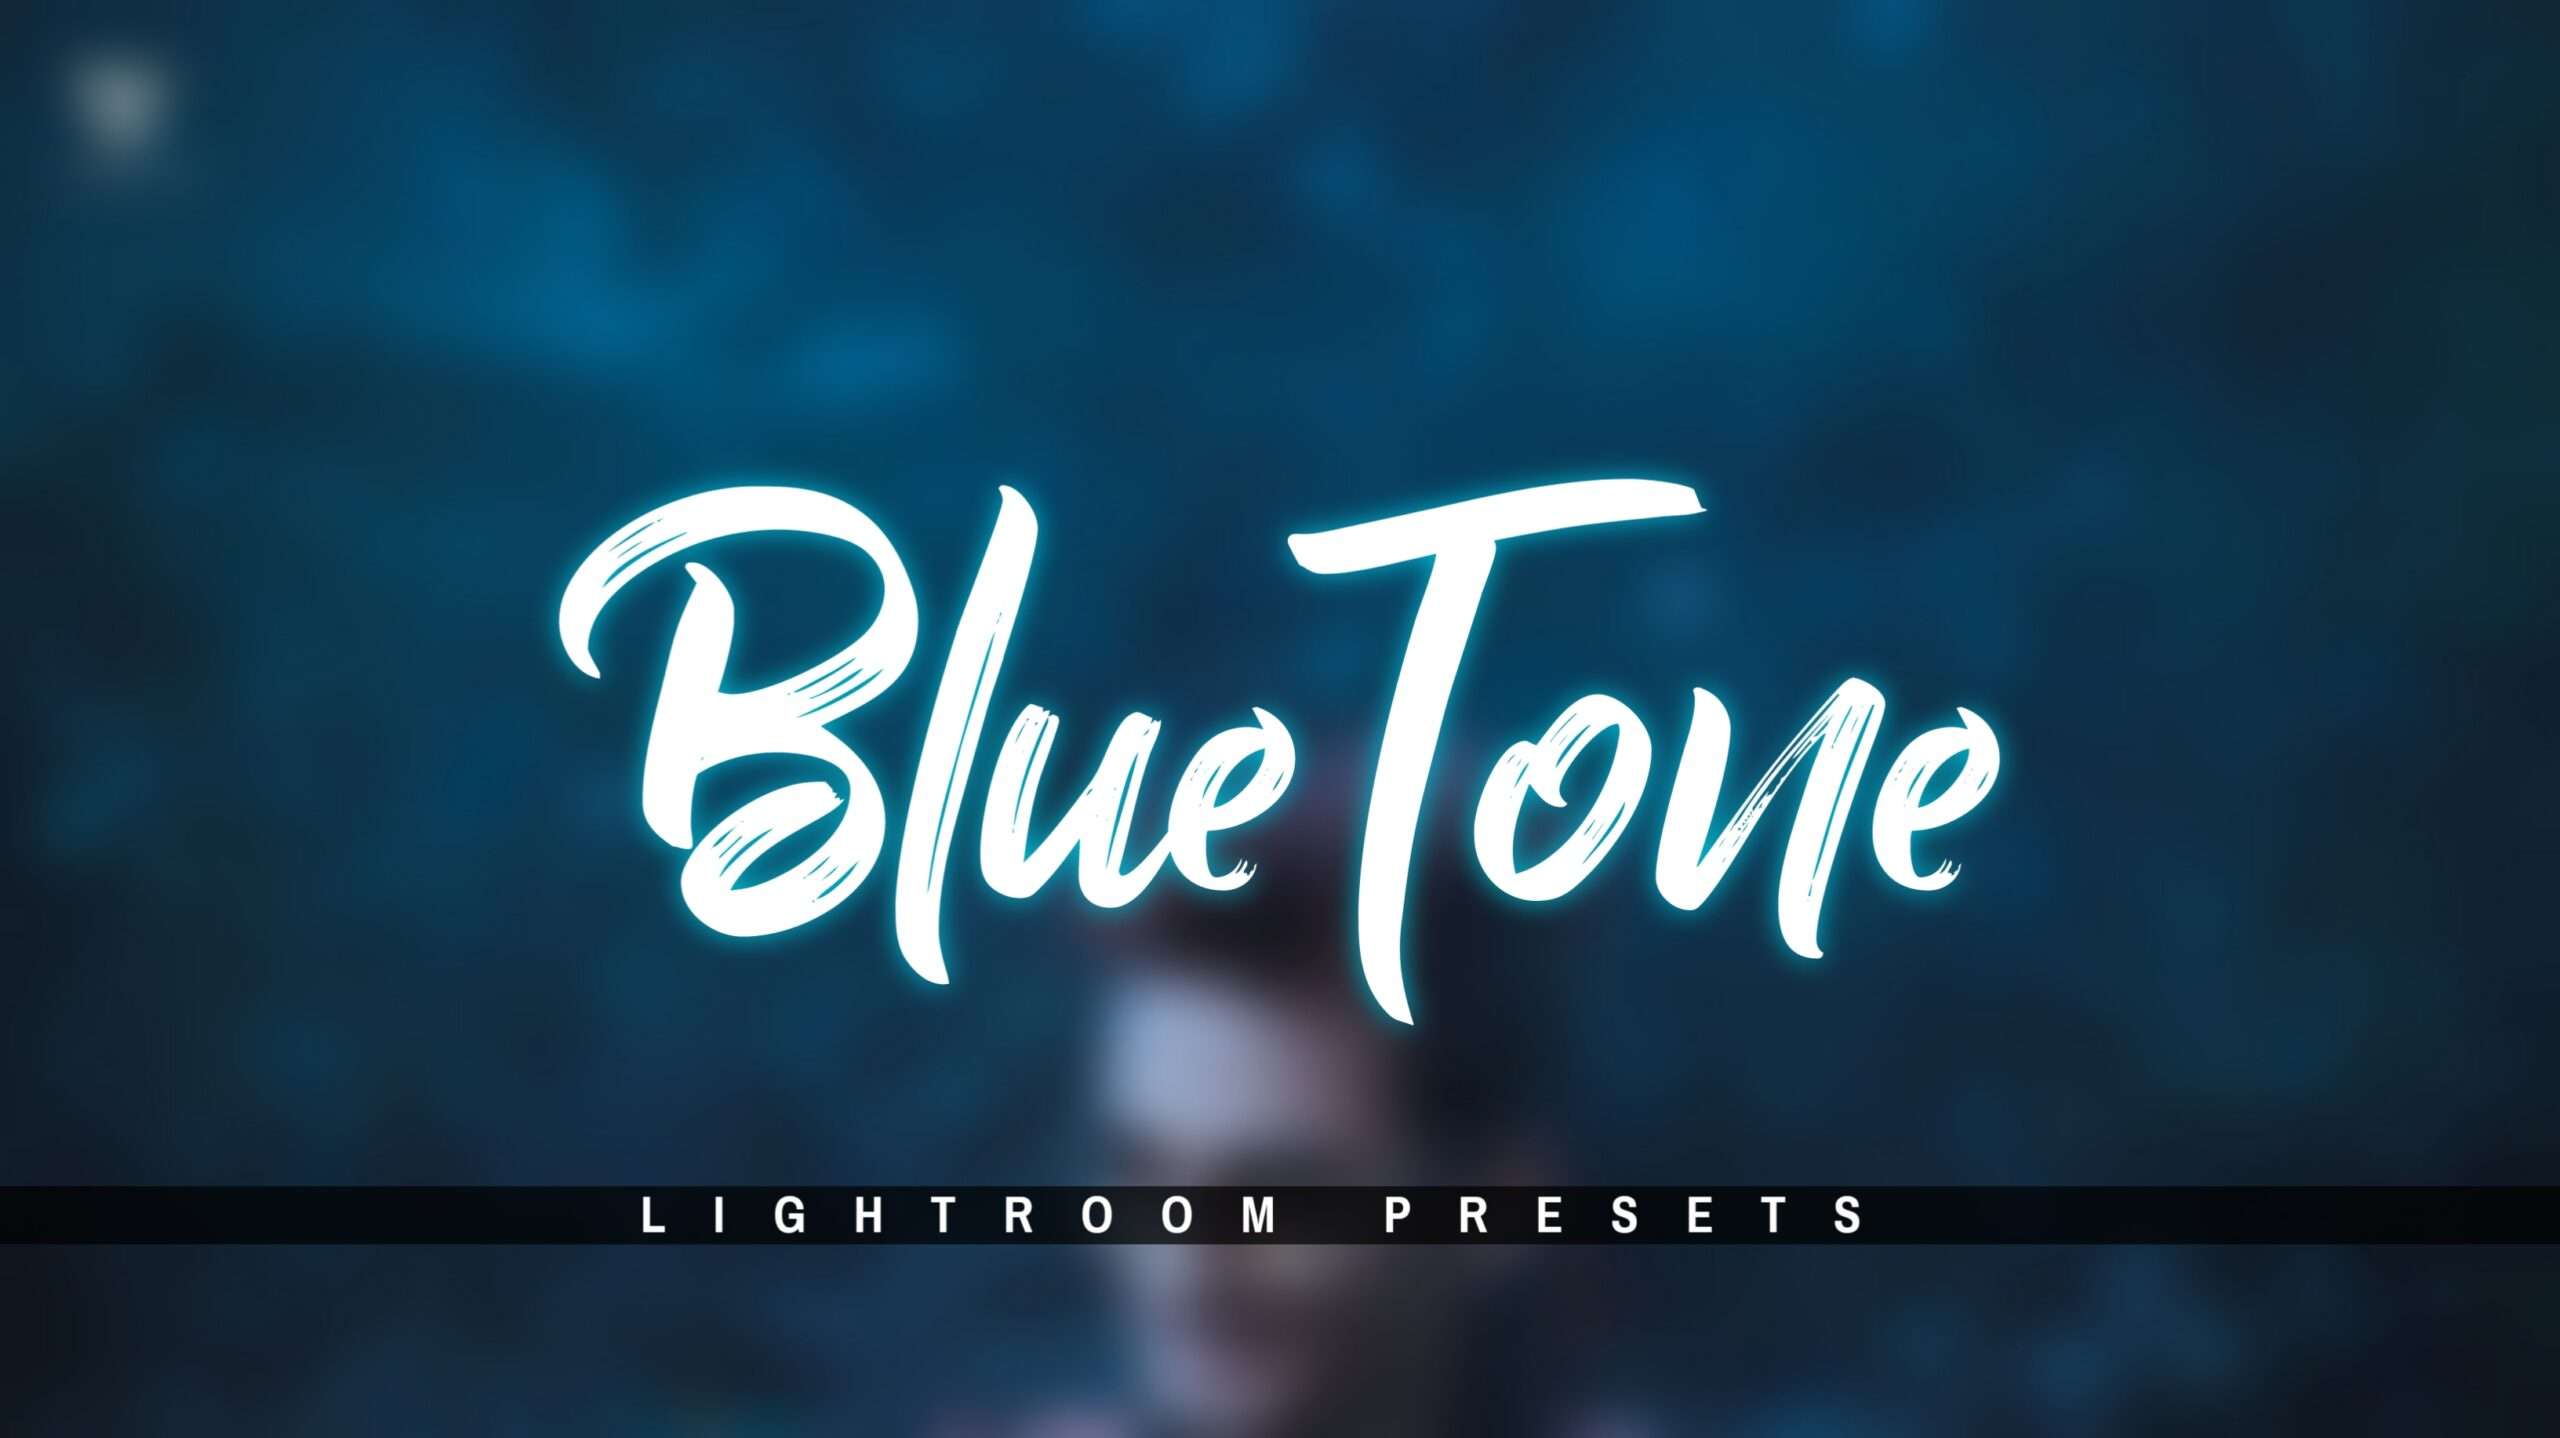 Moody blue lightroom mobile presets free download